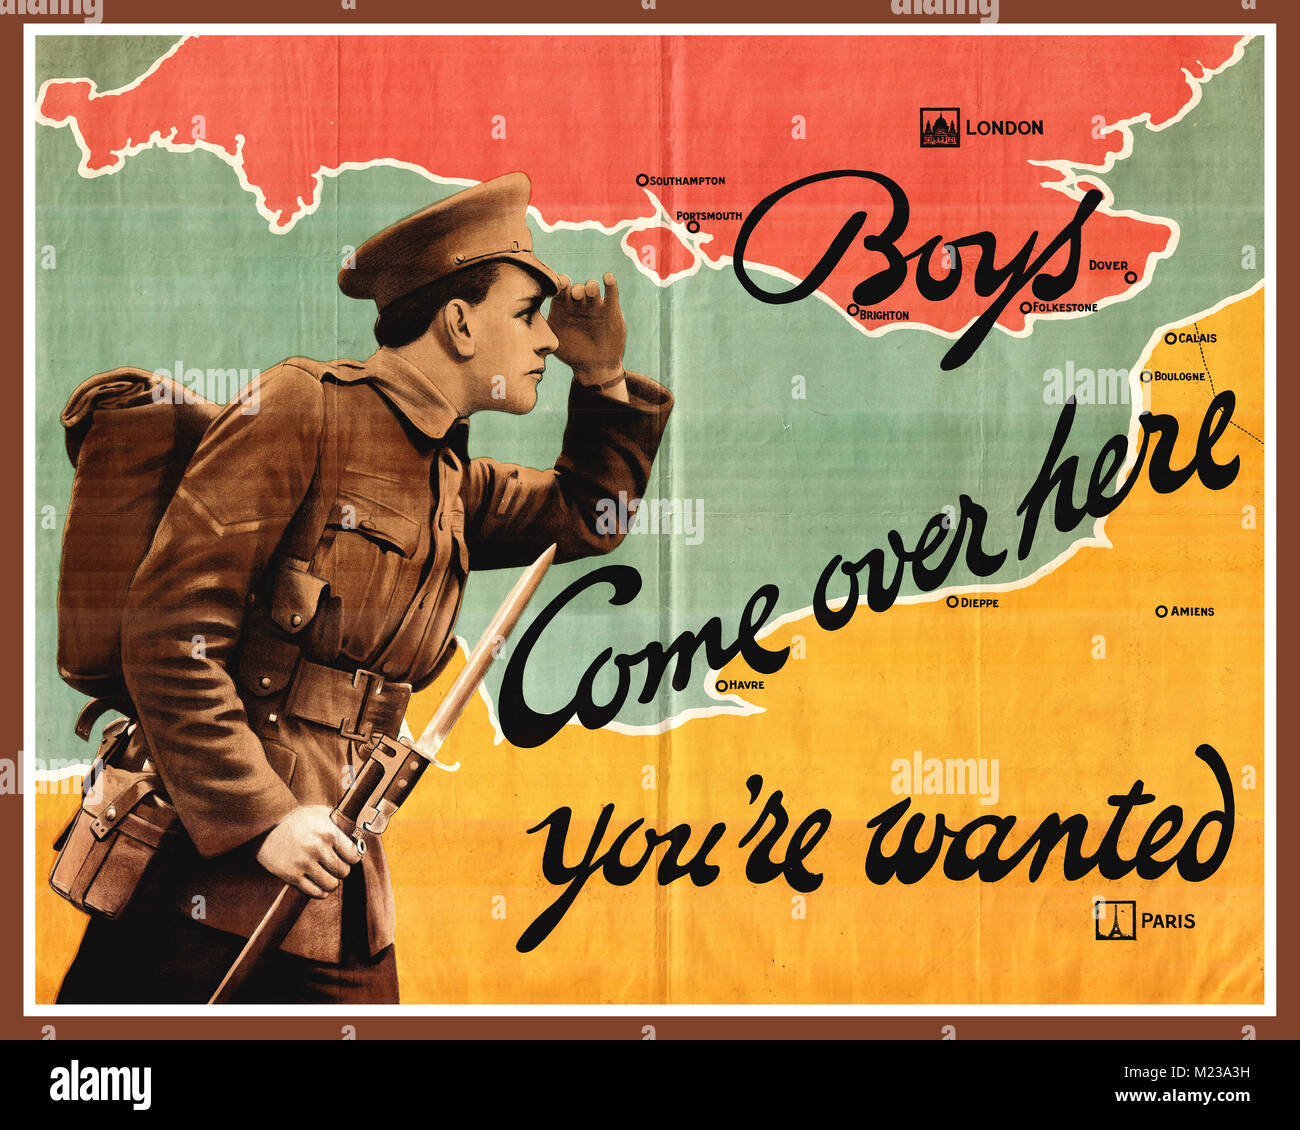 Ww1 1900 S Recruitment Propaganda Poster Featuring A British